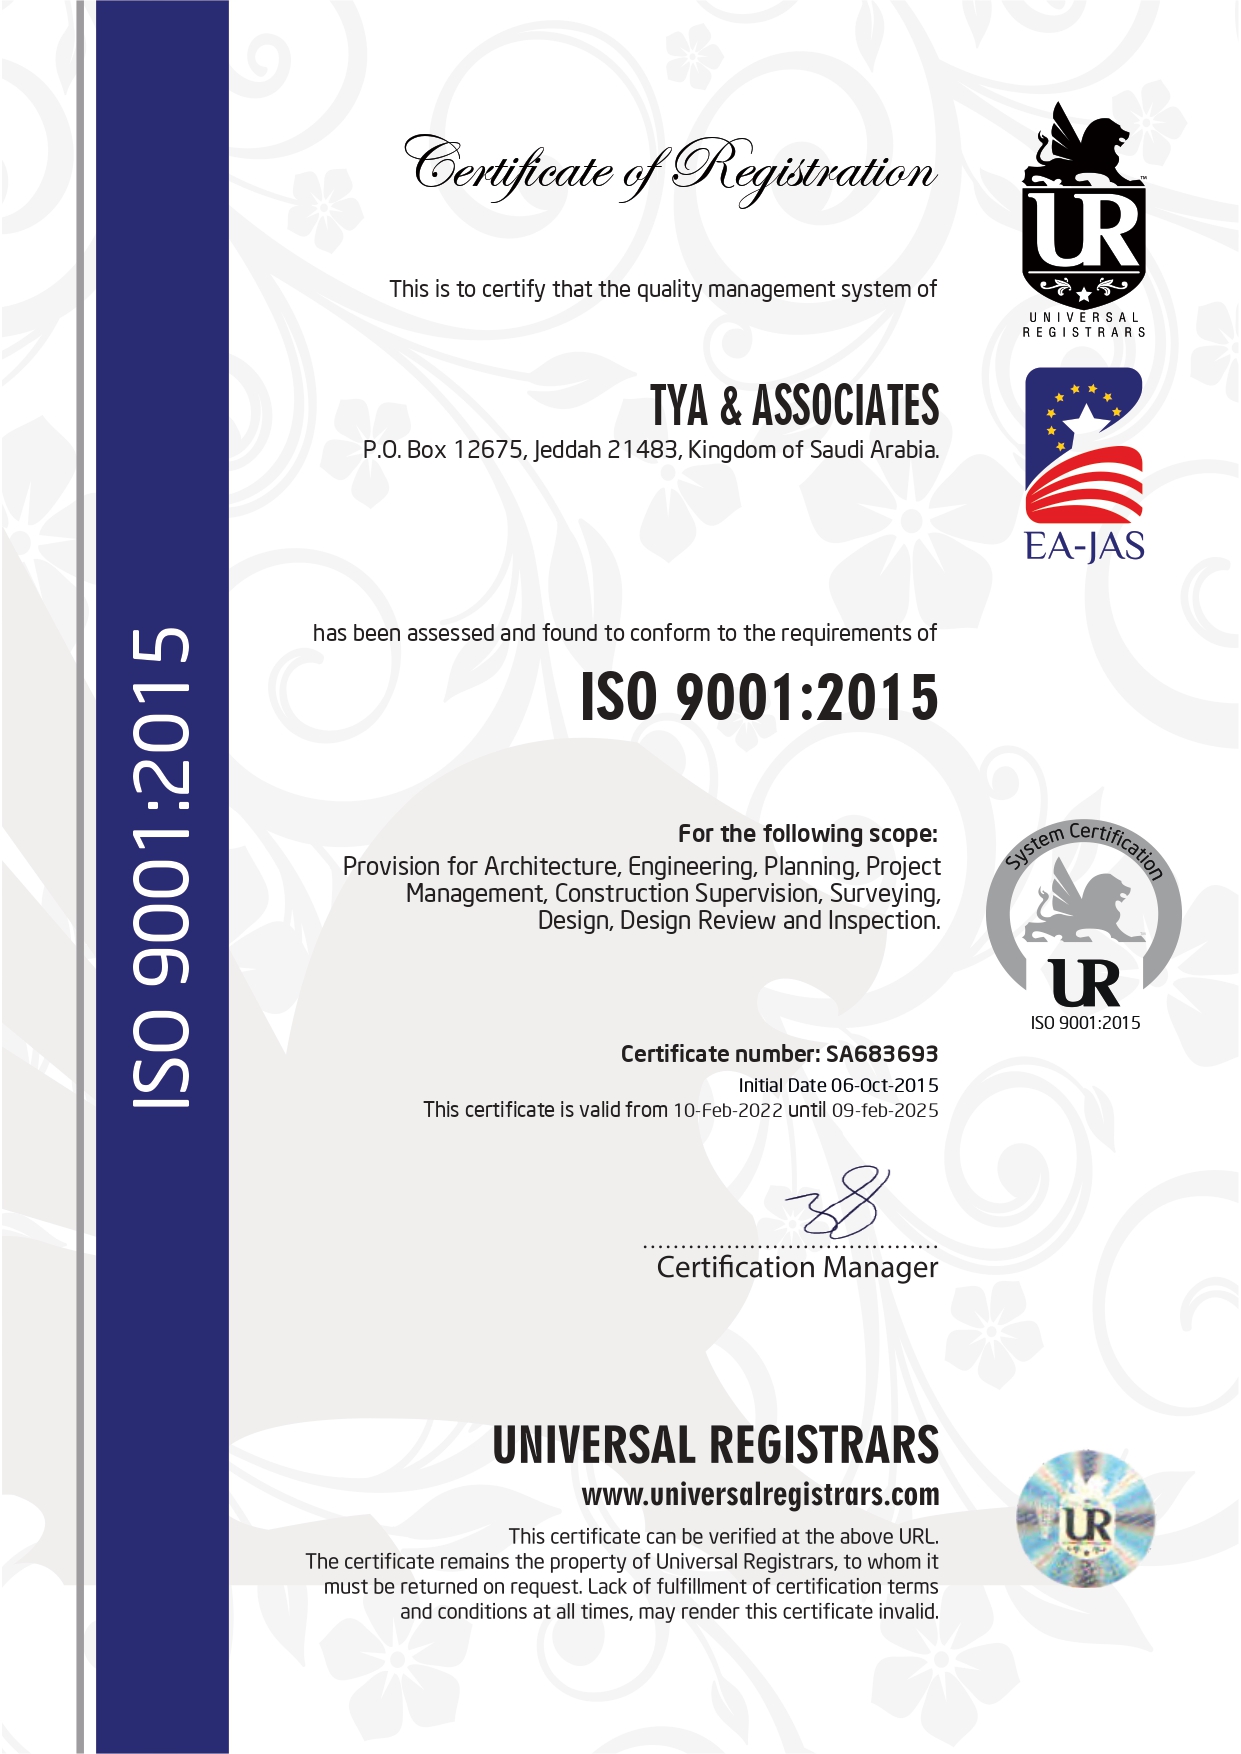 Certificate of registration in ISO 9001:2015